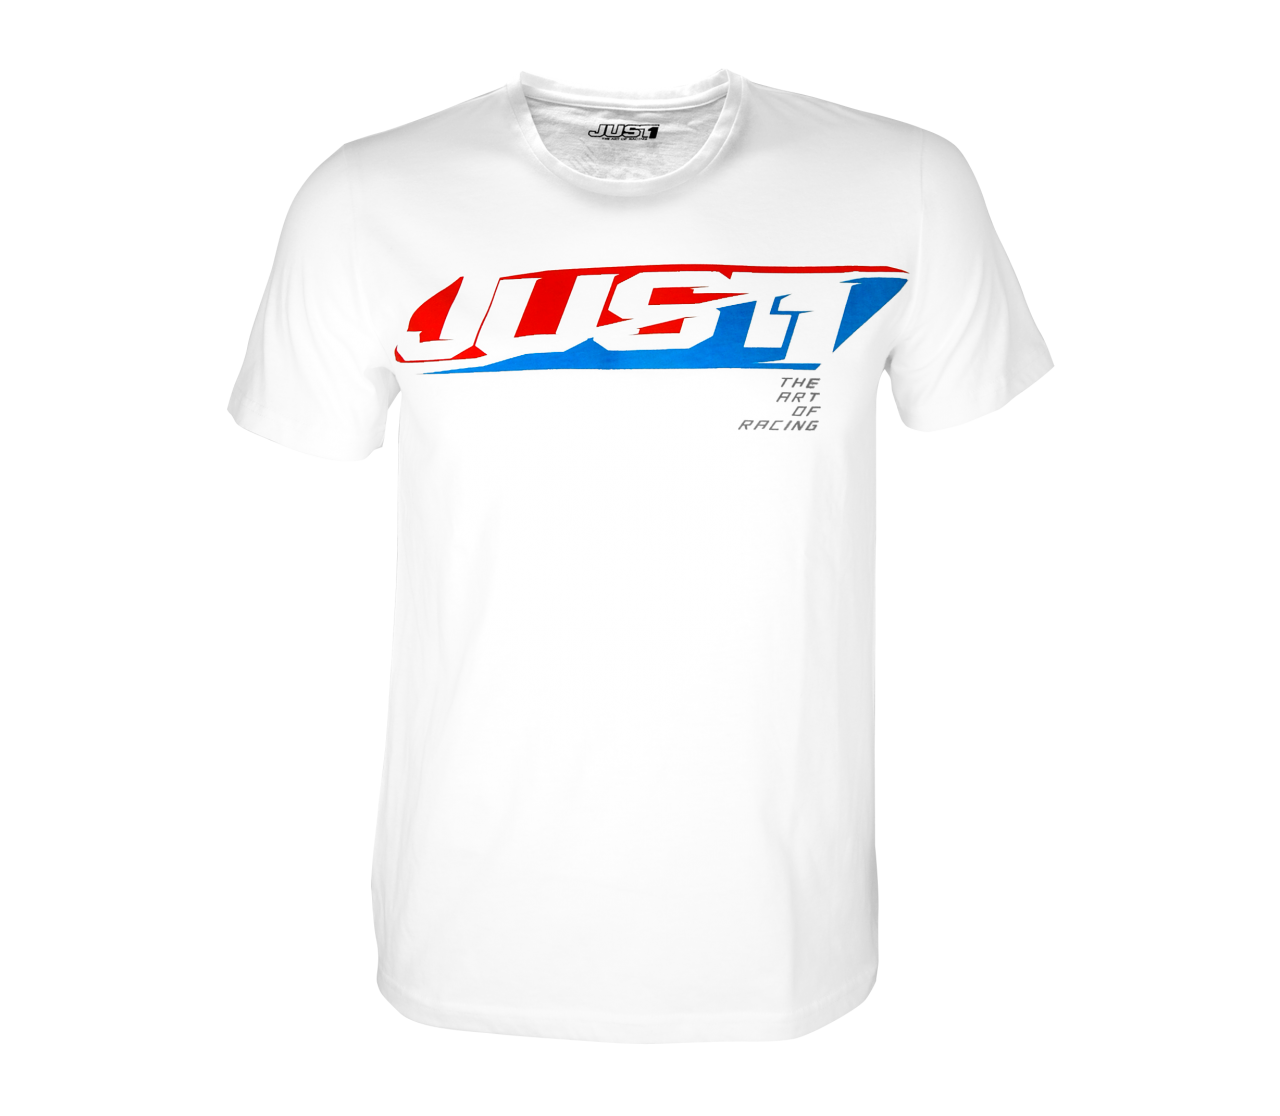 JUST1 T-Shirt Daytona